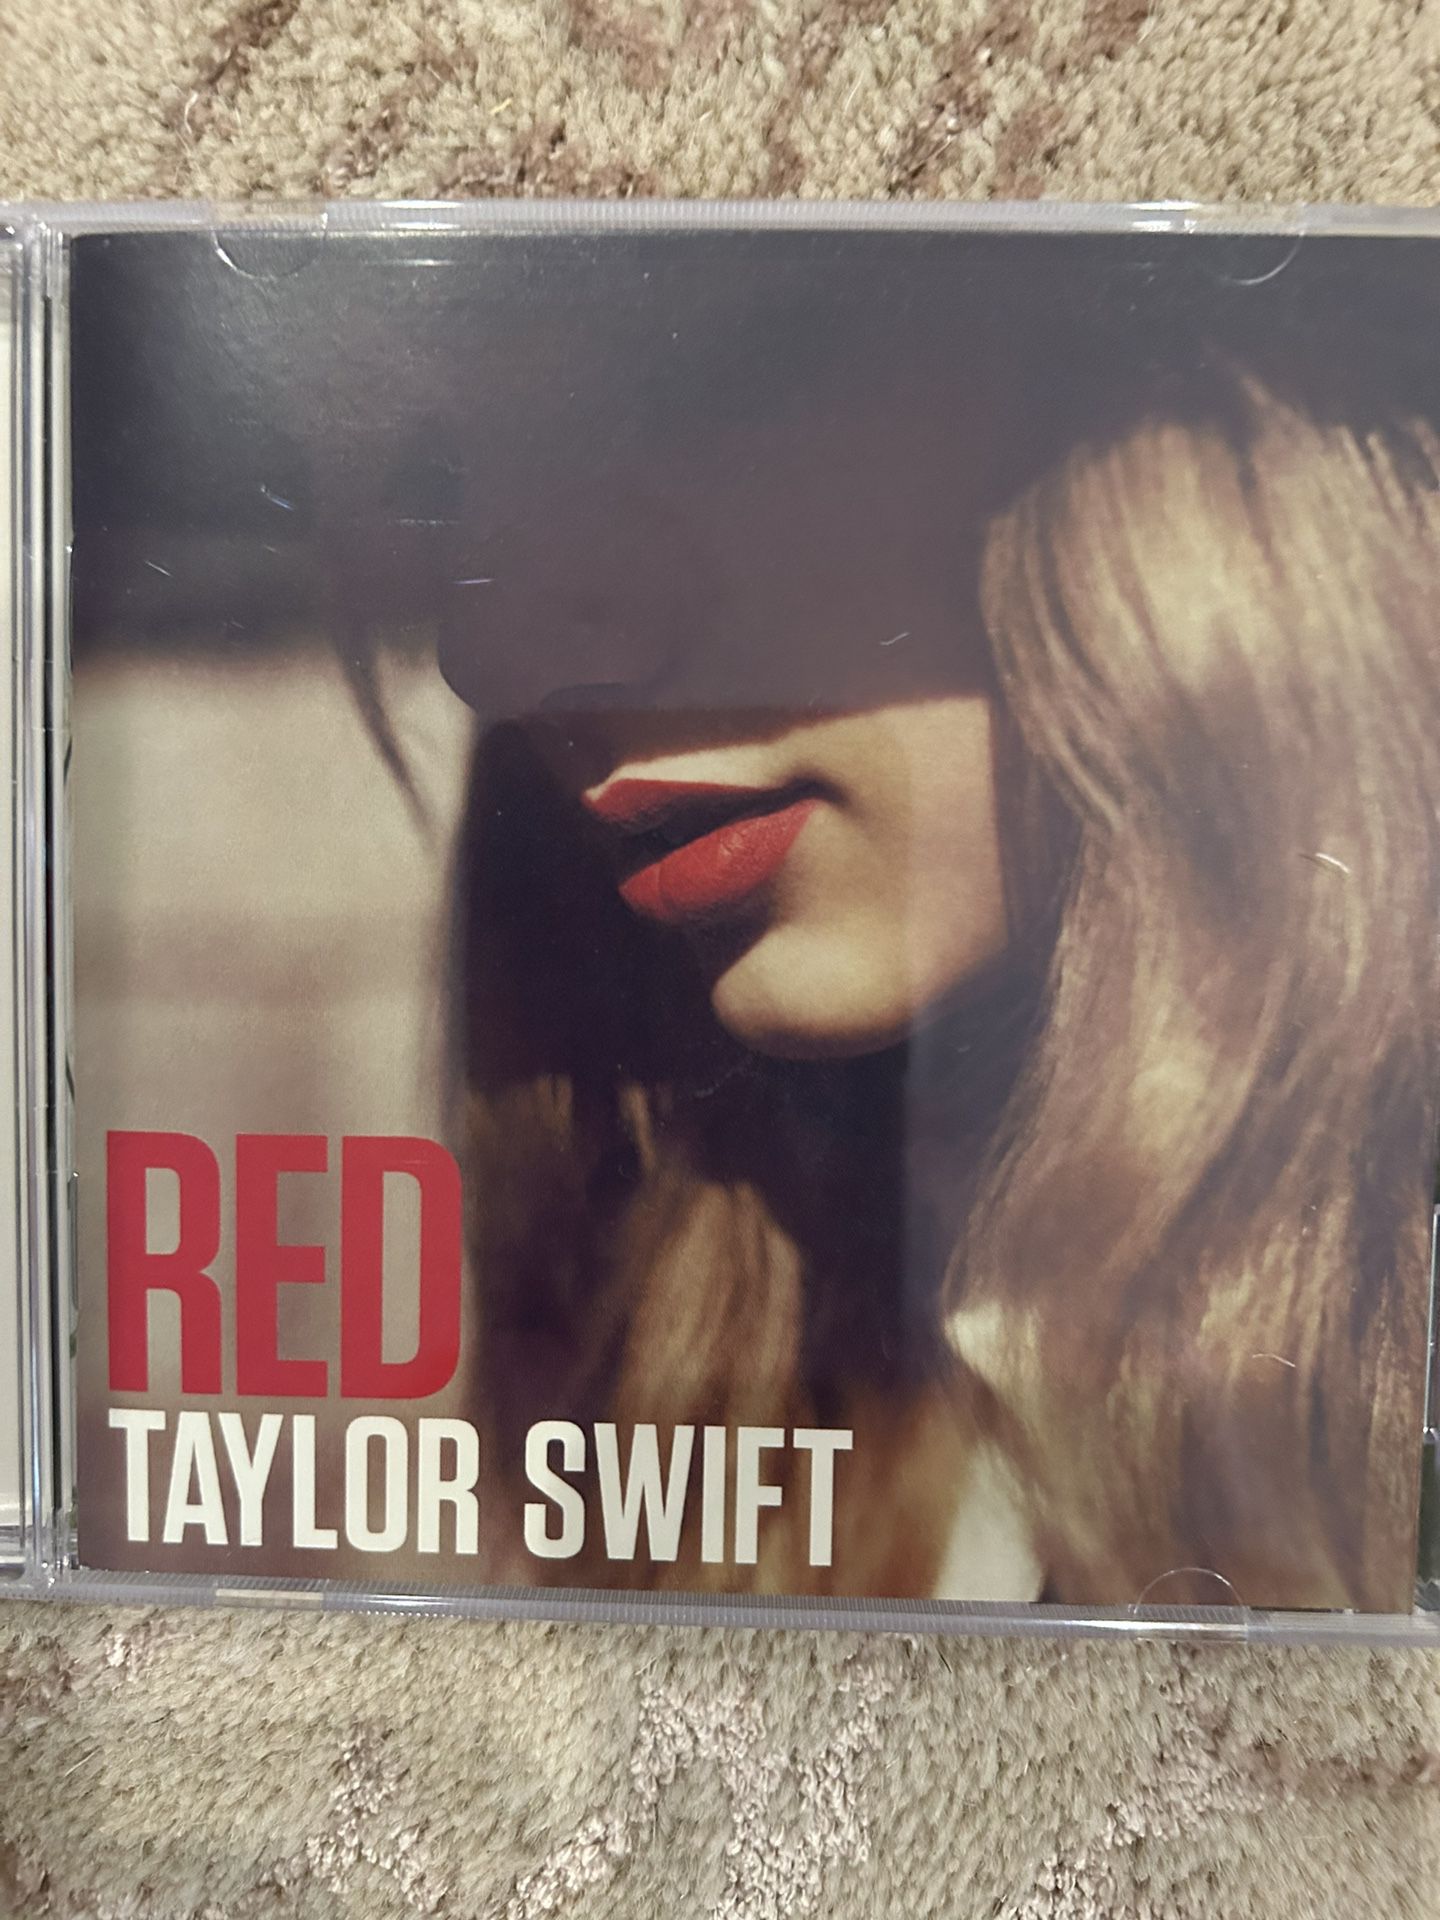 Taylor Swift “RED” CD 💿 2012 - RARE!